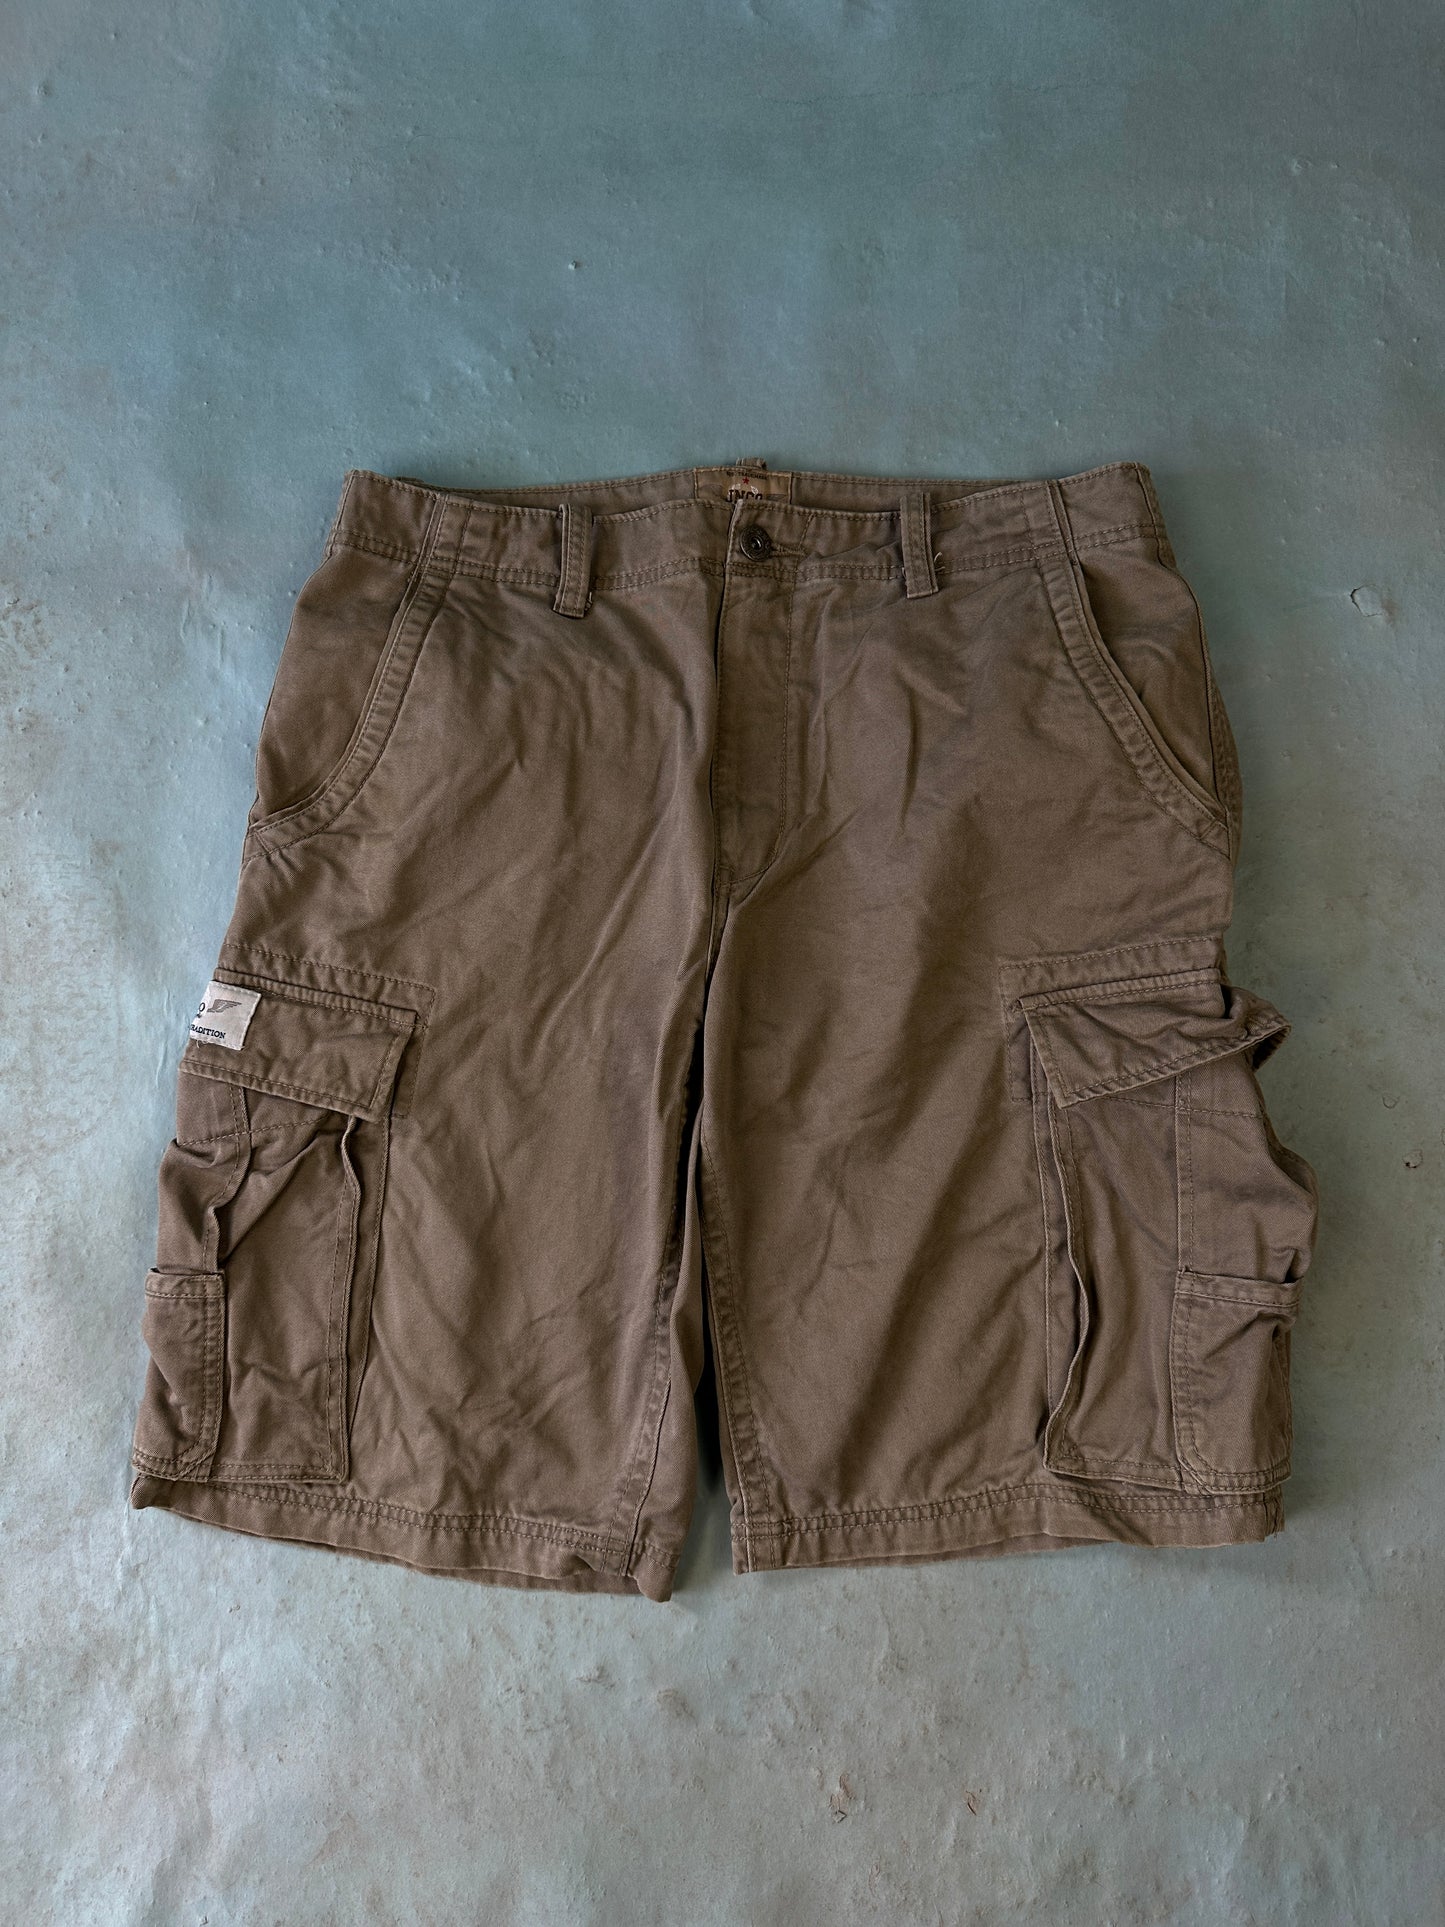 JNCO Cargo Vintage Shorts - 36